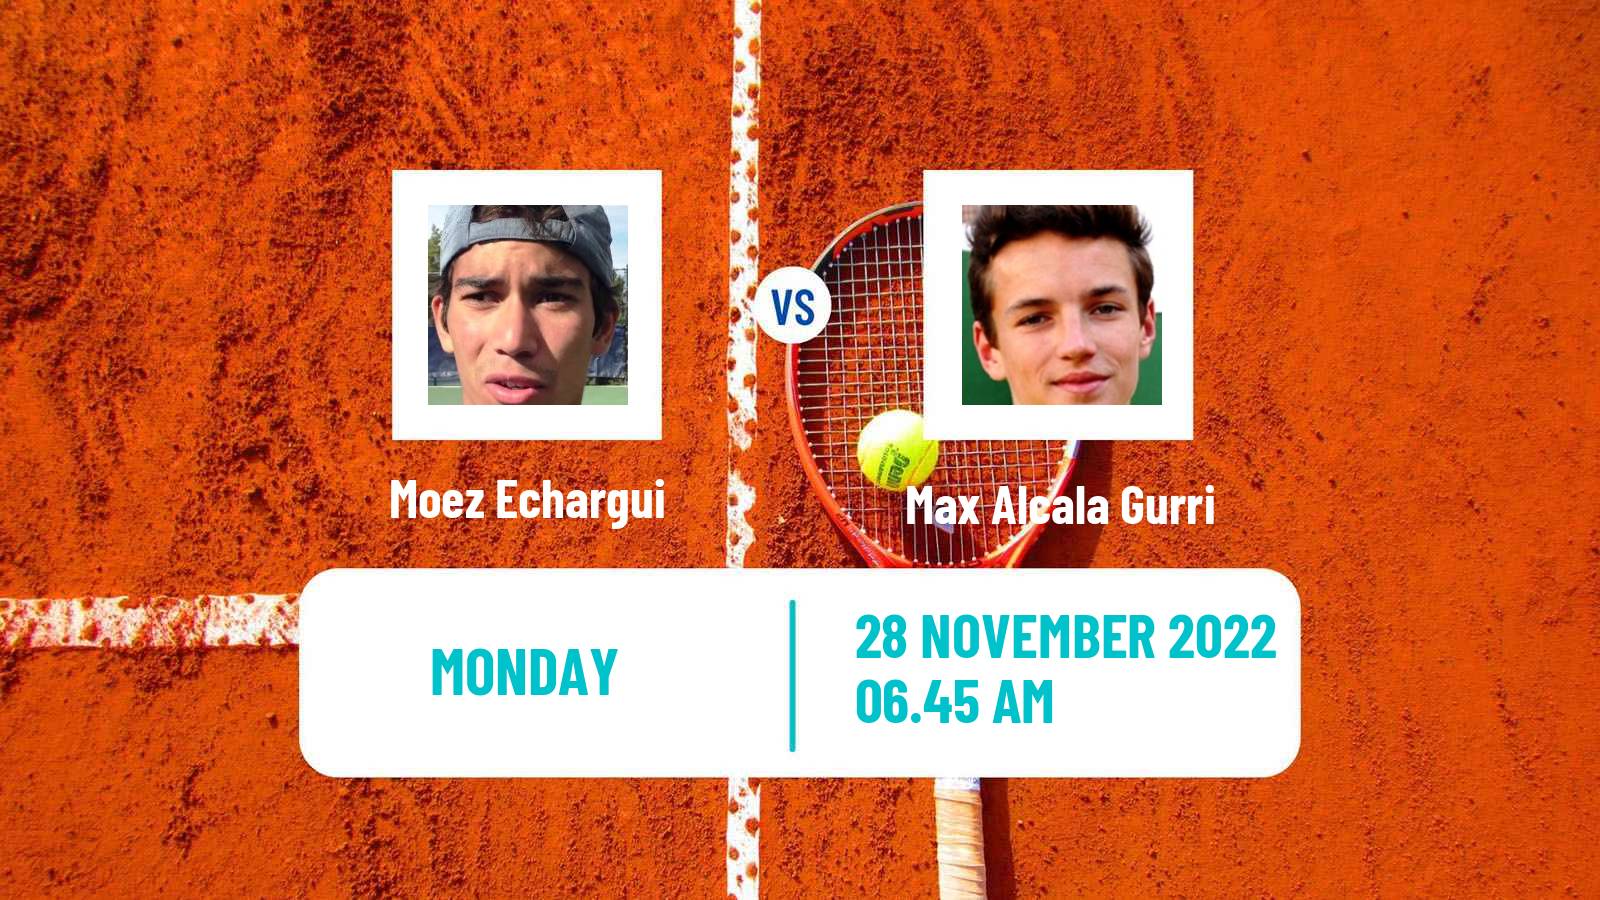 Tennis ATP Challenger Moez Echargui - Max Alcala Gurri